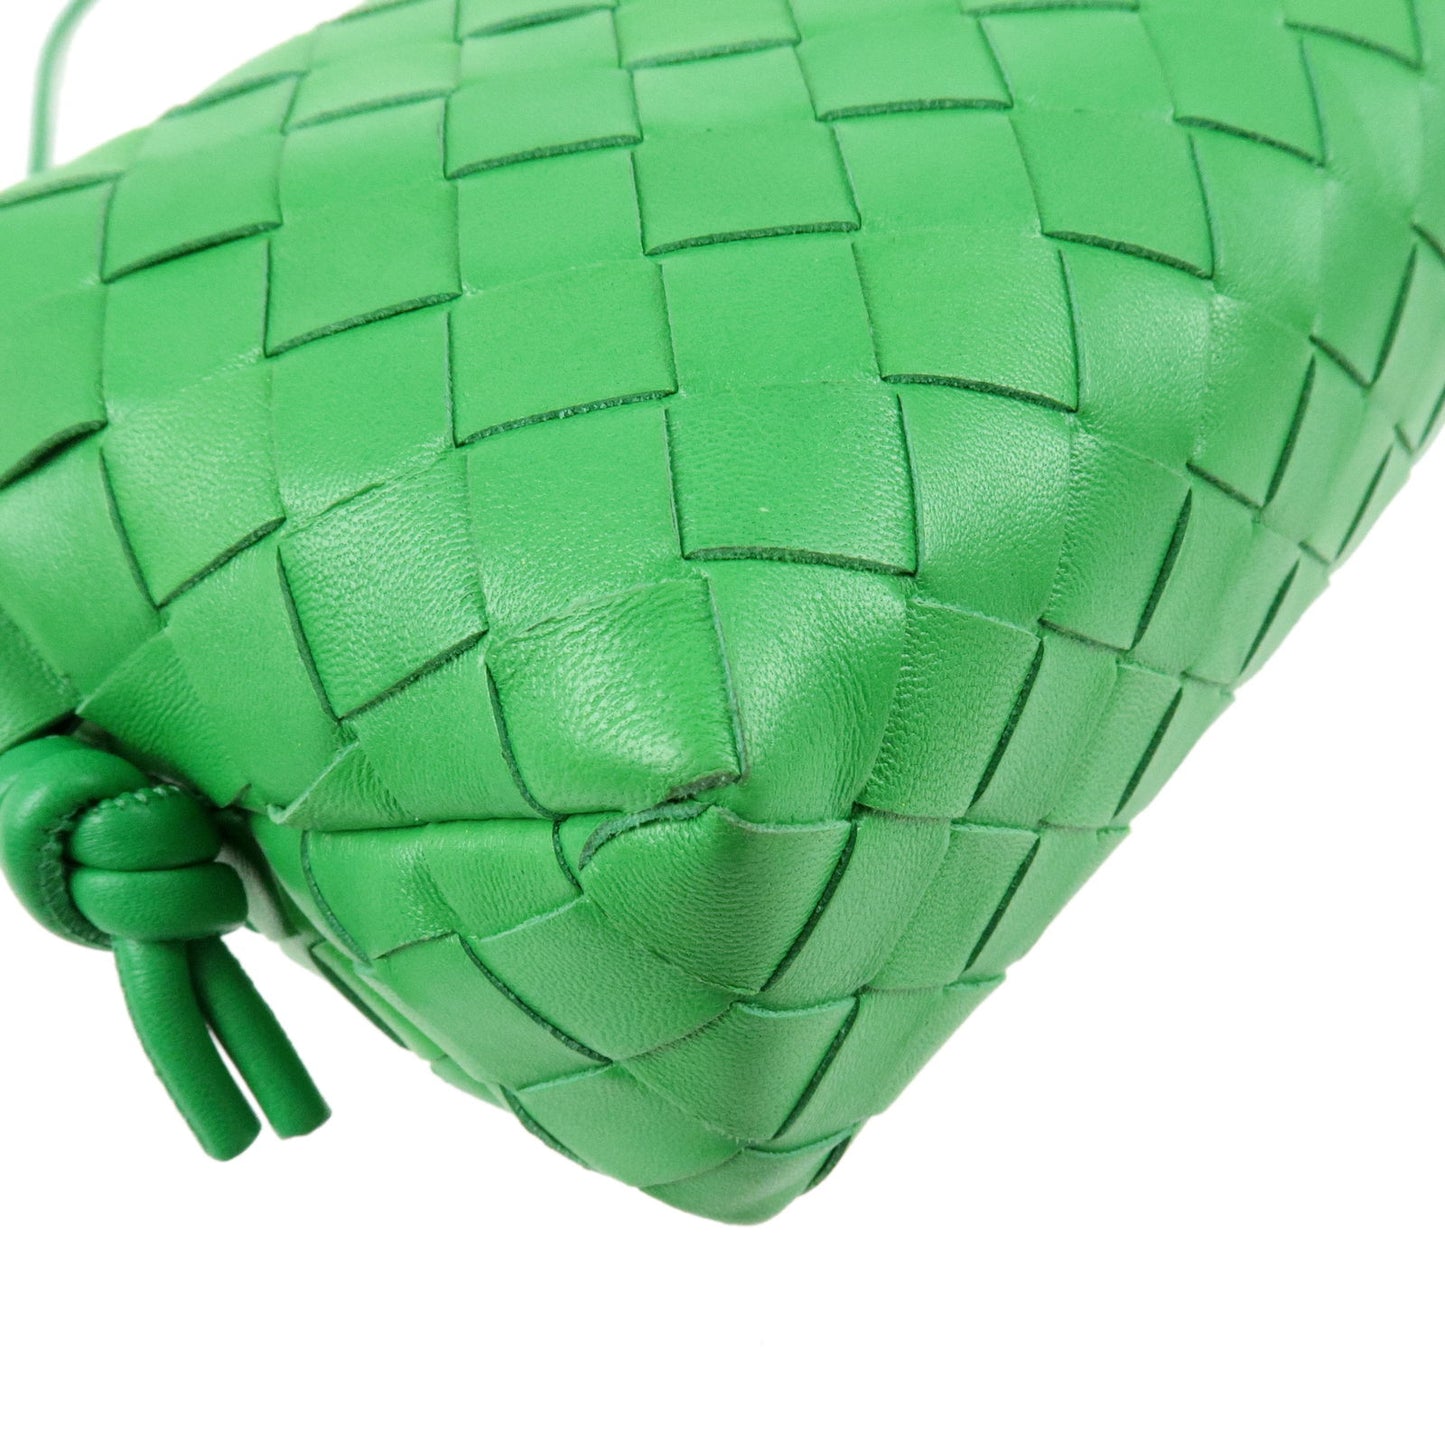 BOTTEGA VENETA Loop Intrecciato Leather Crossbody Bag Green 666683